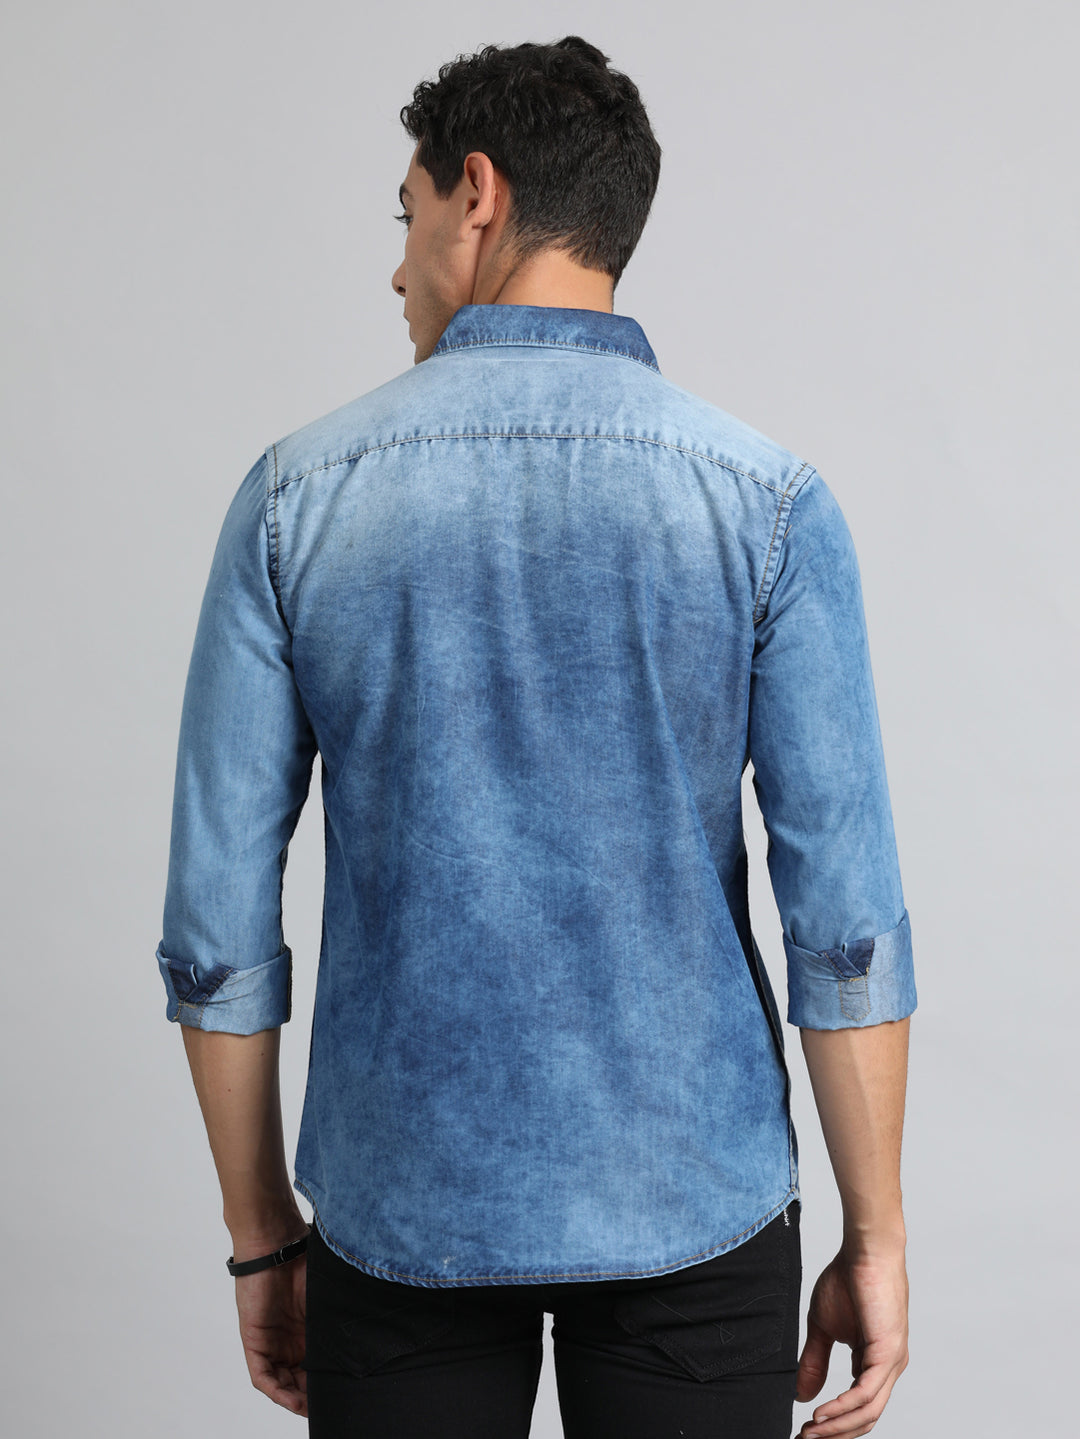 Stone Blue Solid Denim Shirt Solid Shirt Bushirt   